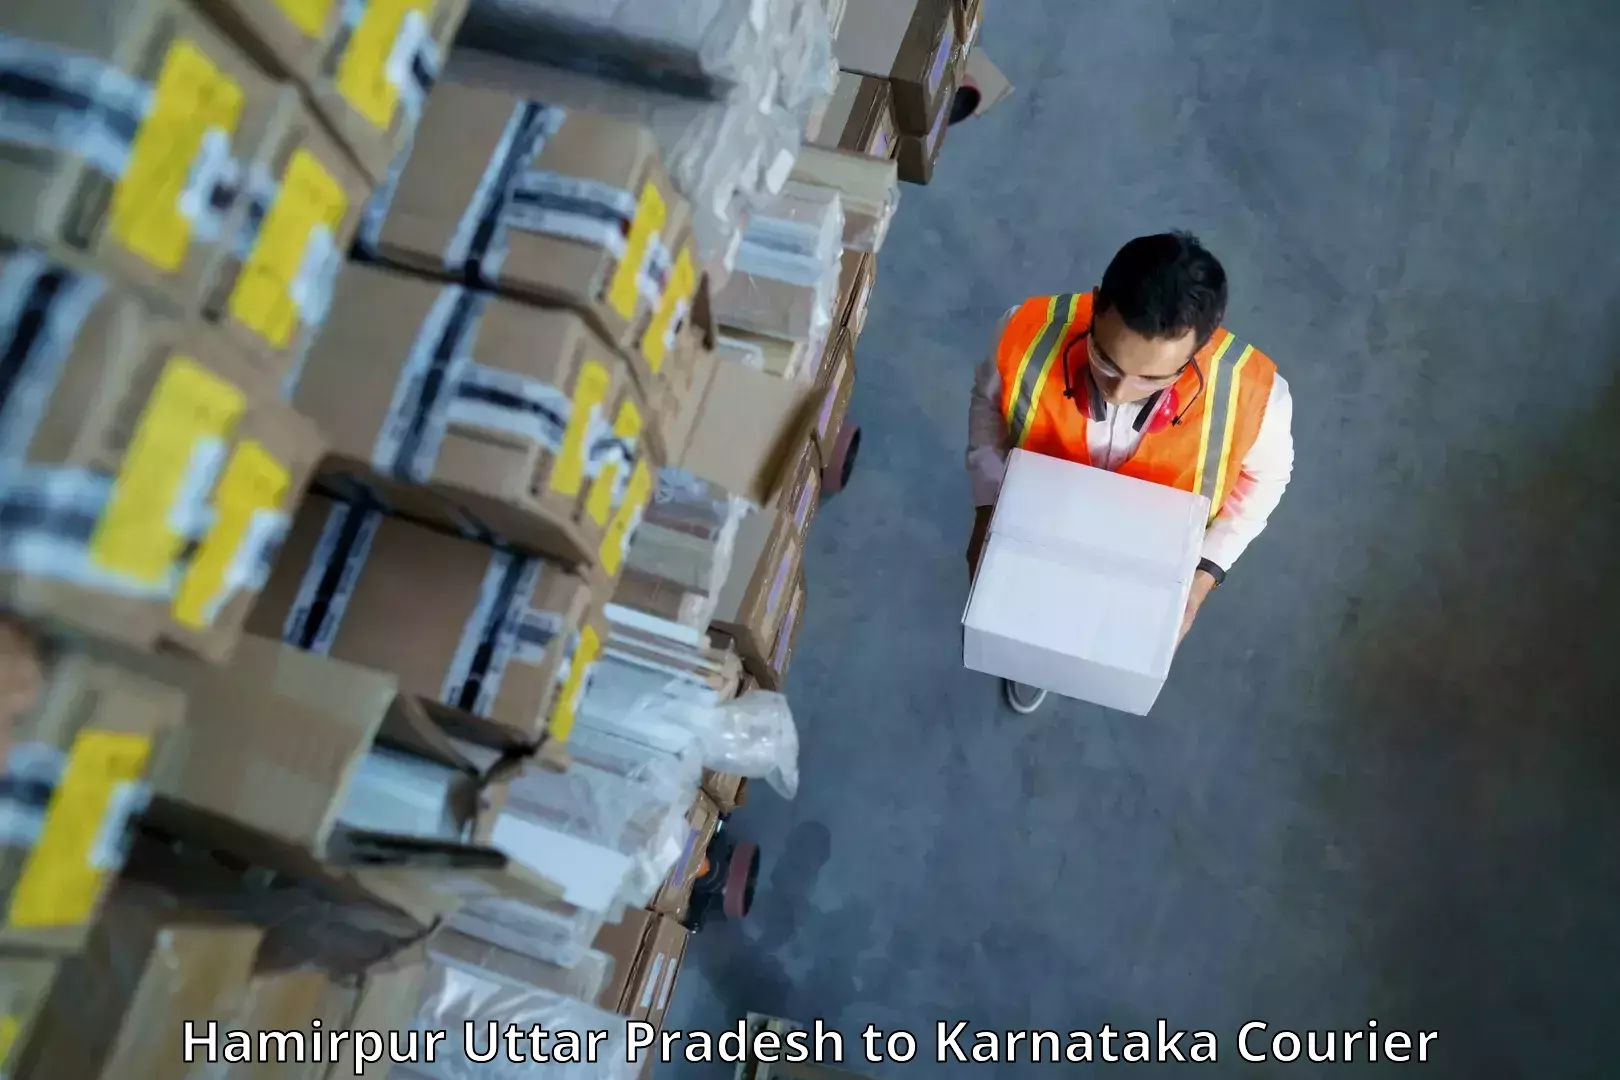 International parcel service Hamirpur Uttar Pradesh to Kodagu